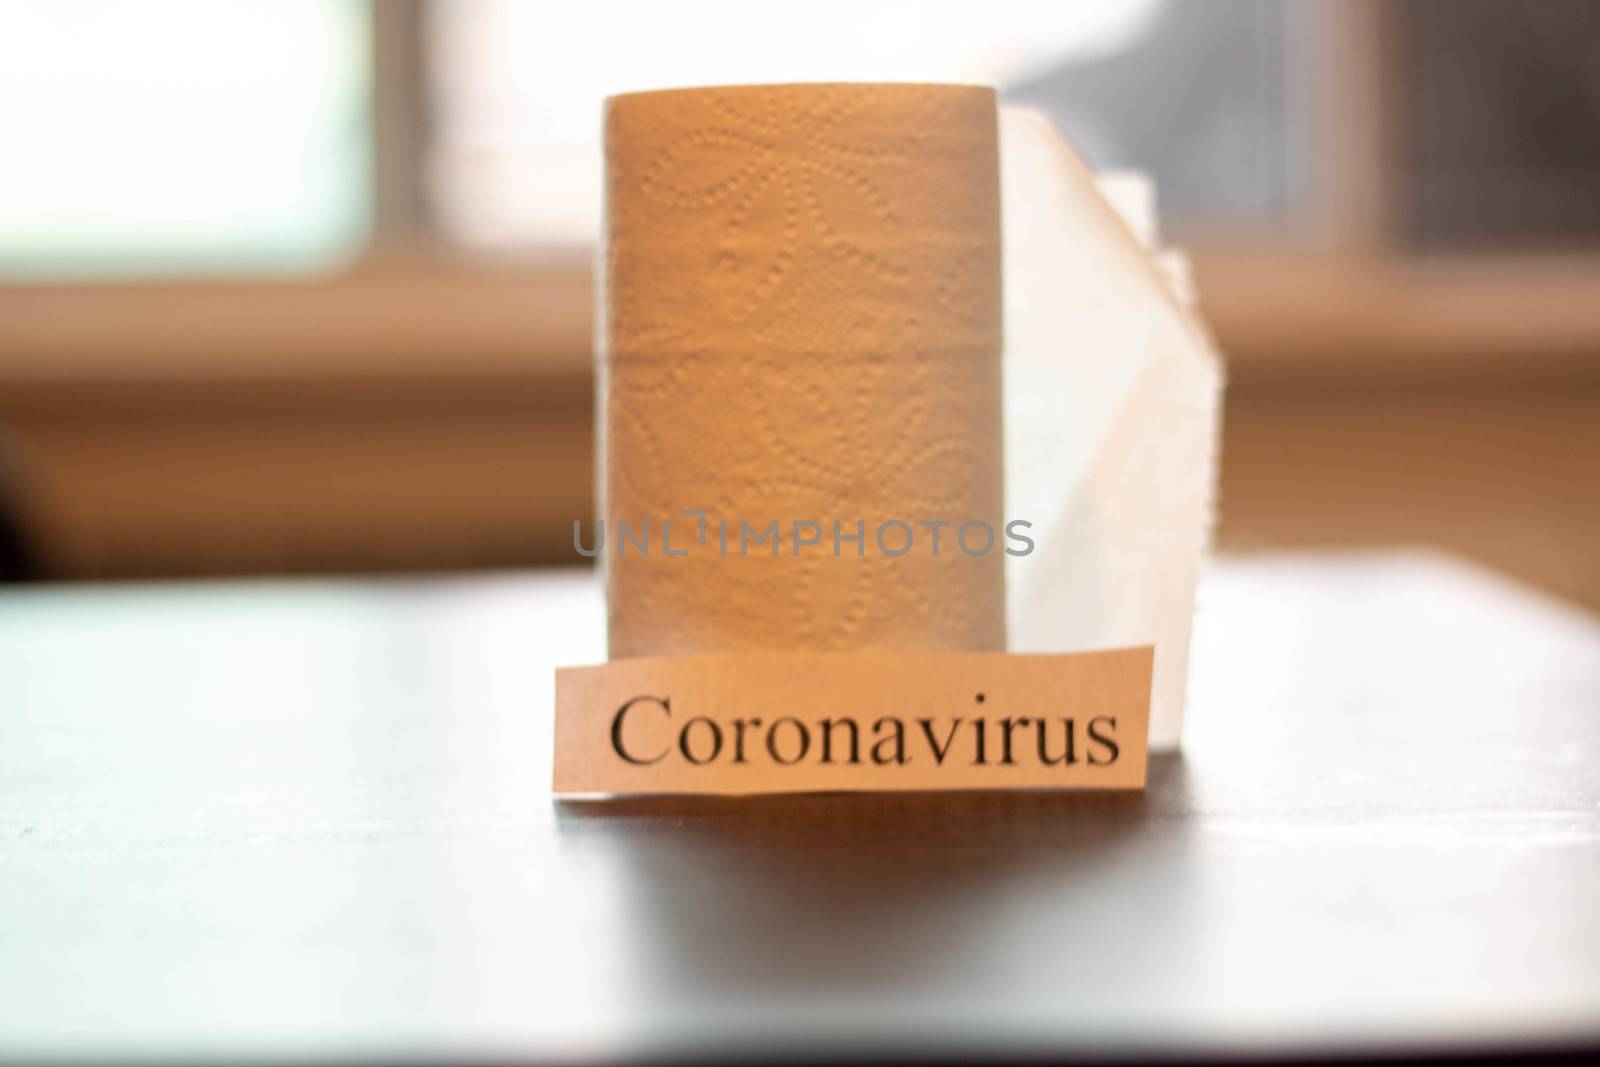 Coronavirus next to rolls of toilet paper. Theme of stocking up on supplies by mynewturtle1